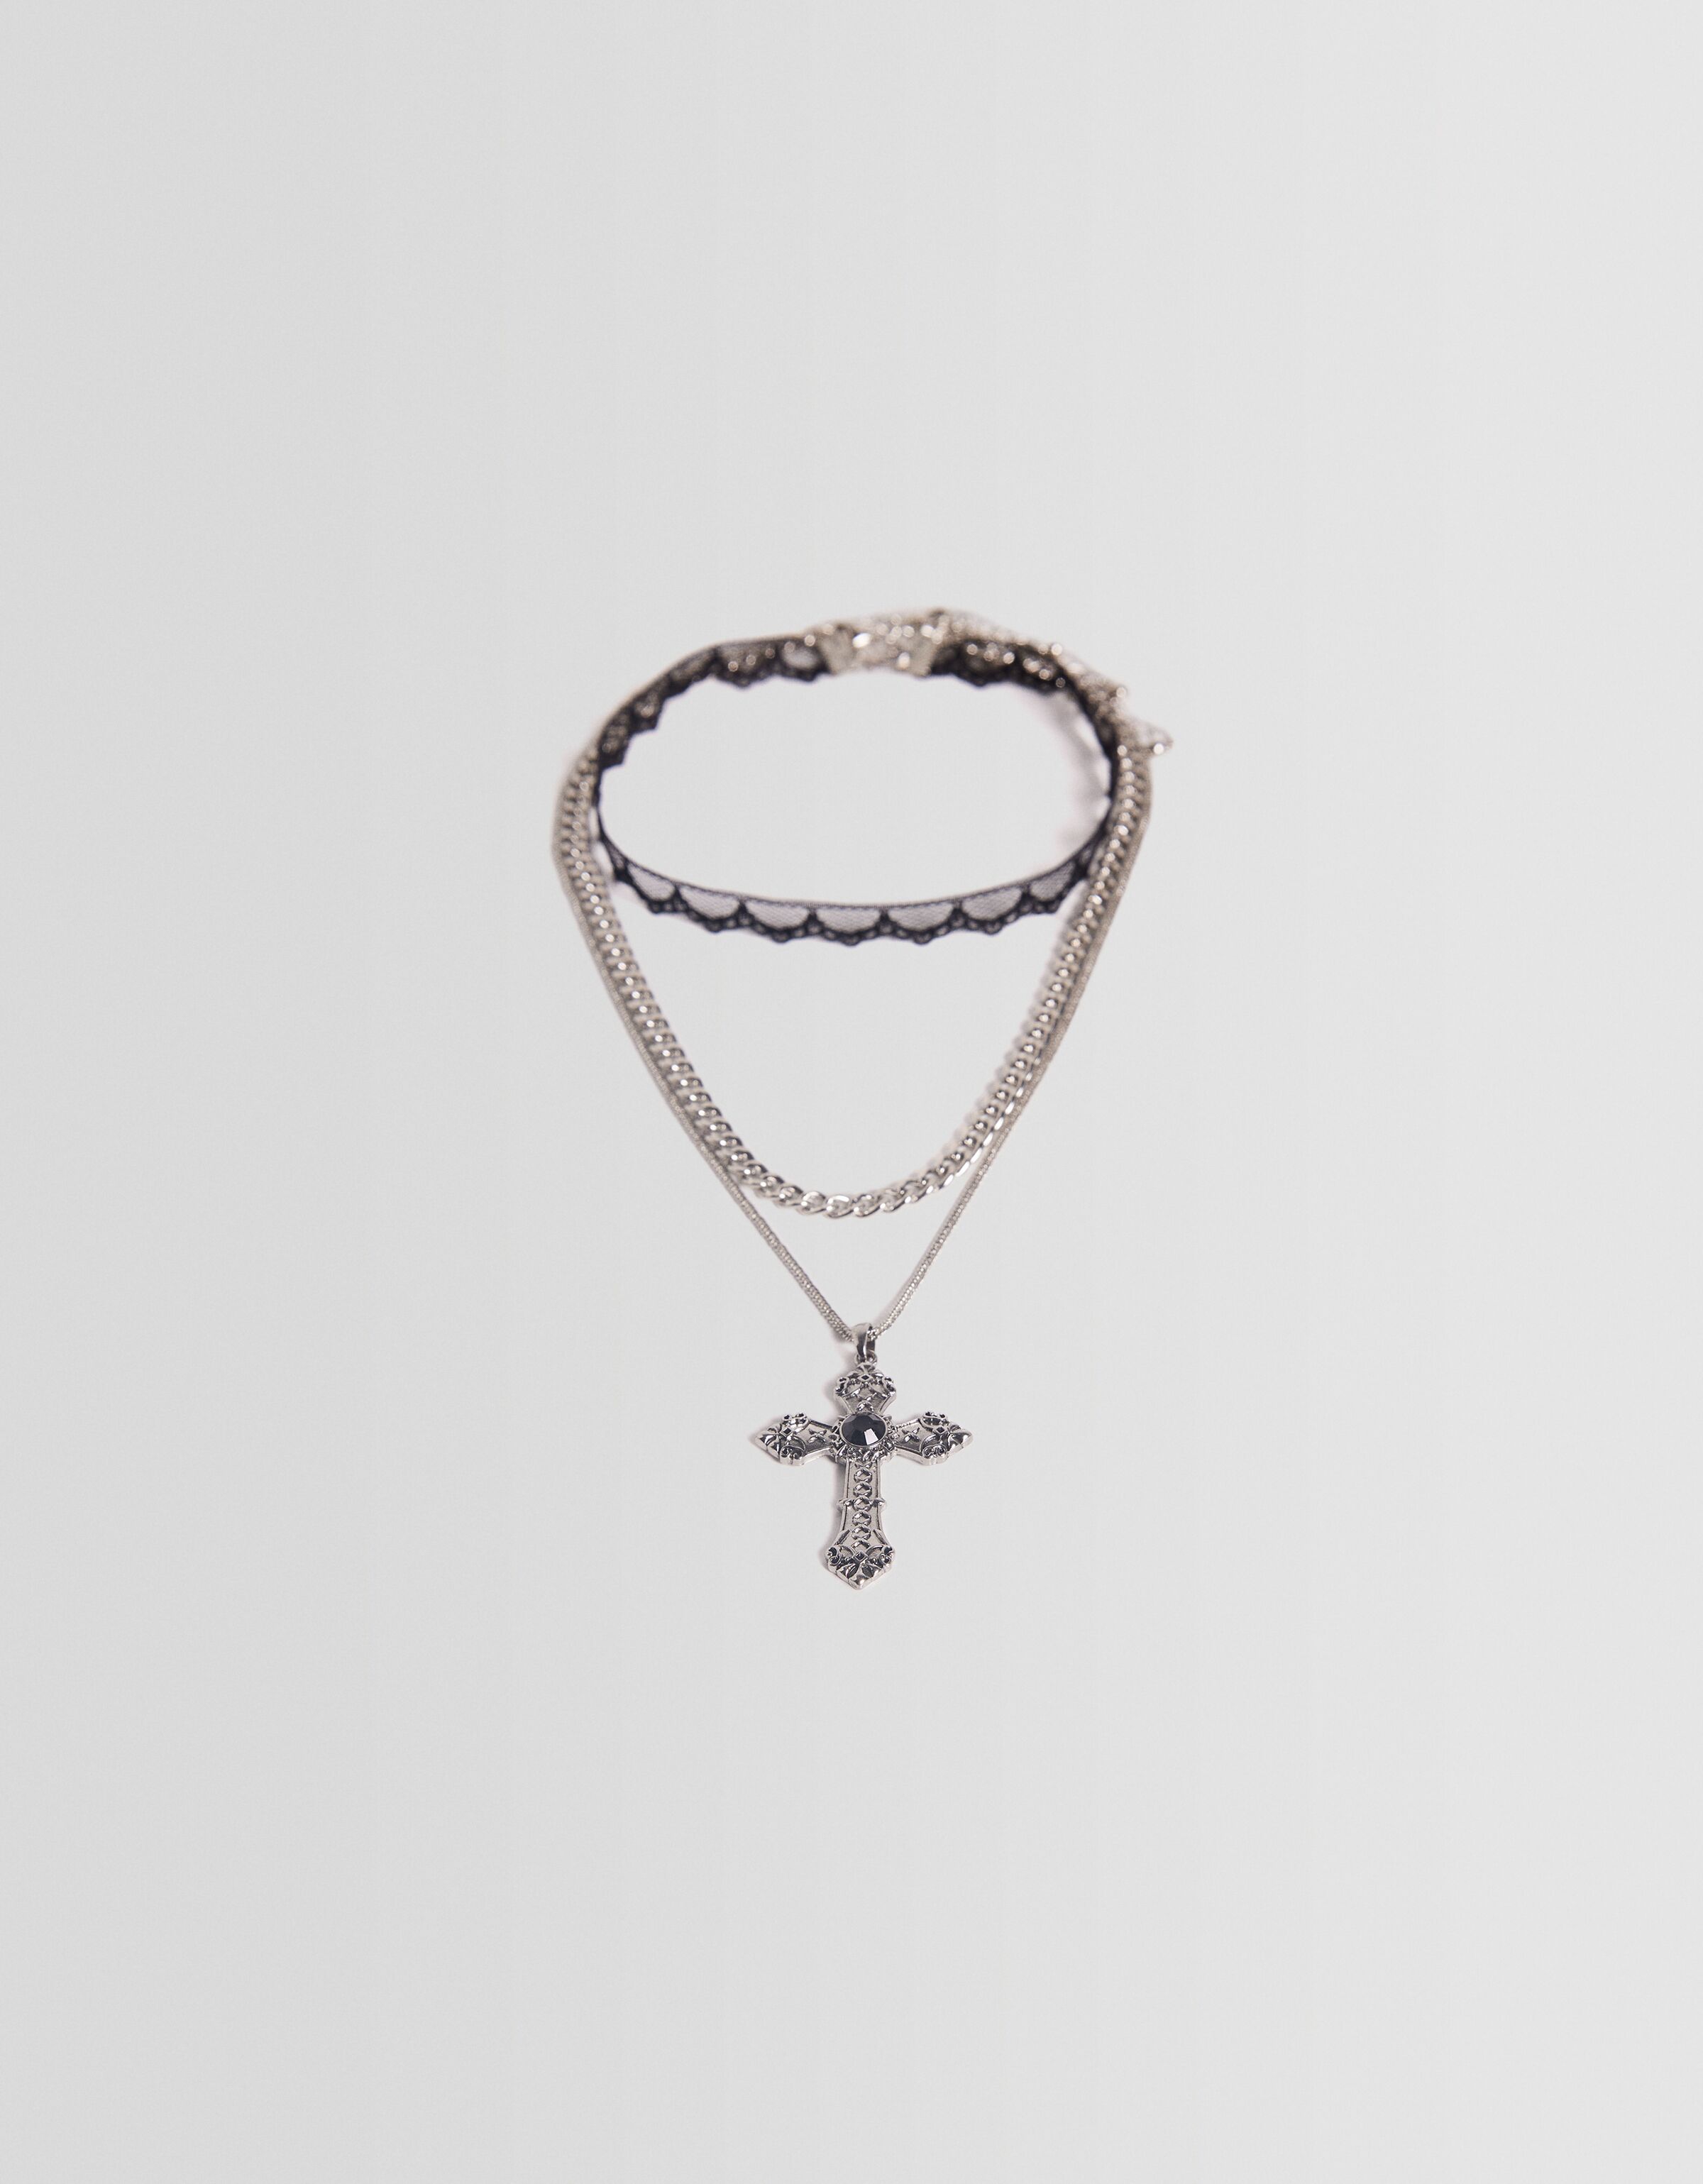 Gothic Sword Cross Pendant Chain Necklace Choker Silver Tone Mens Man